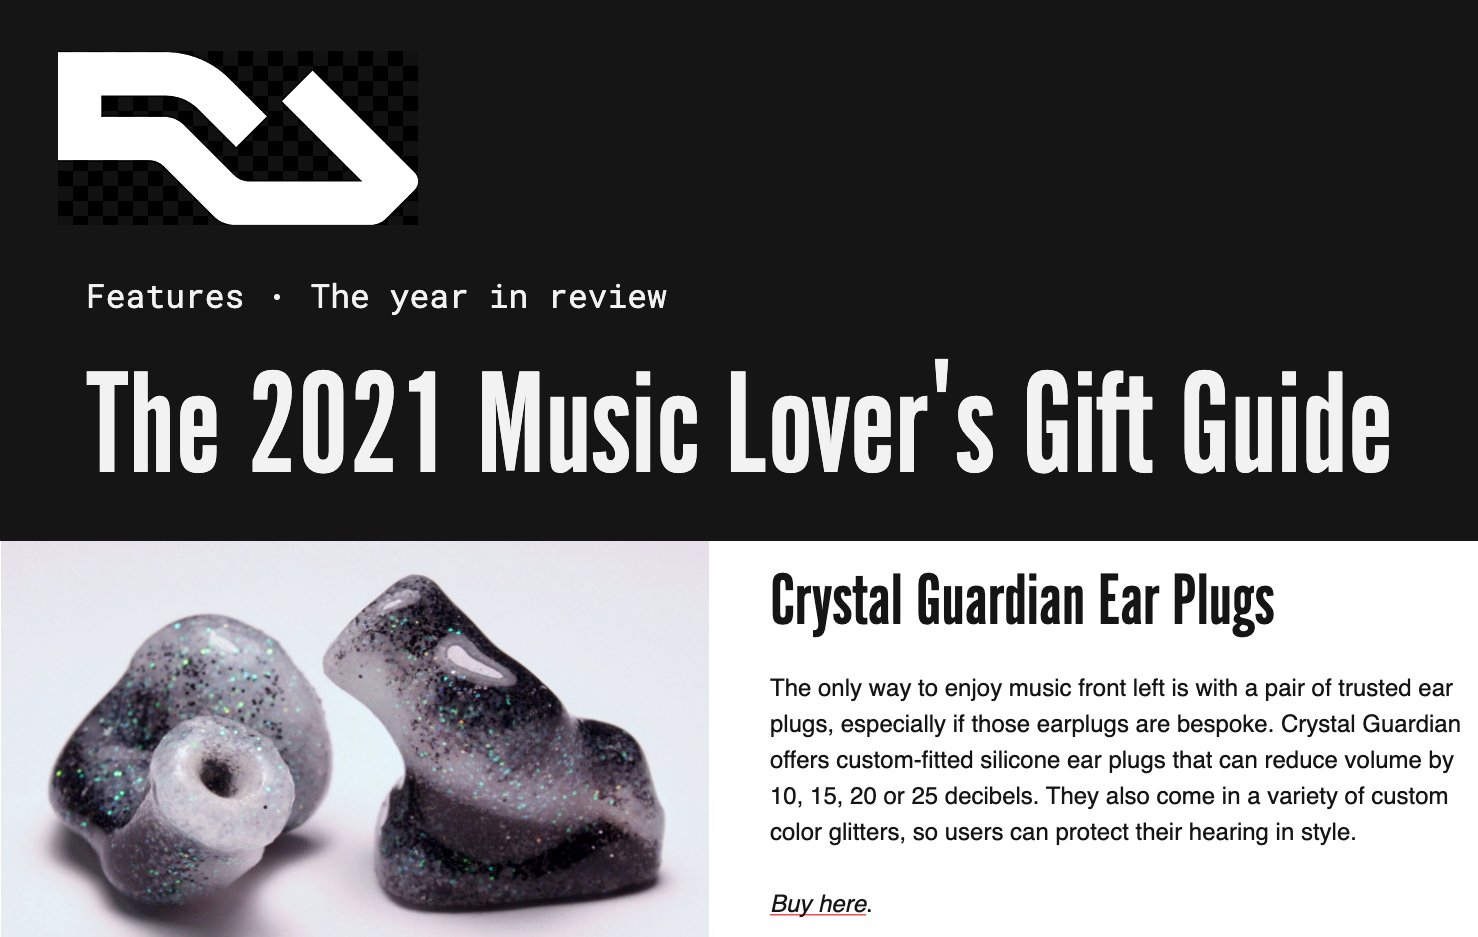 Featured in Resident Advisor's 2021 Music Lover's Gift Guide